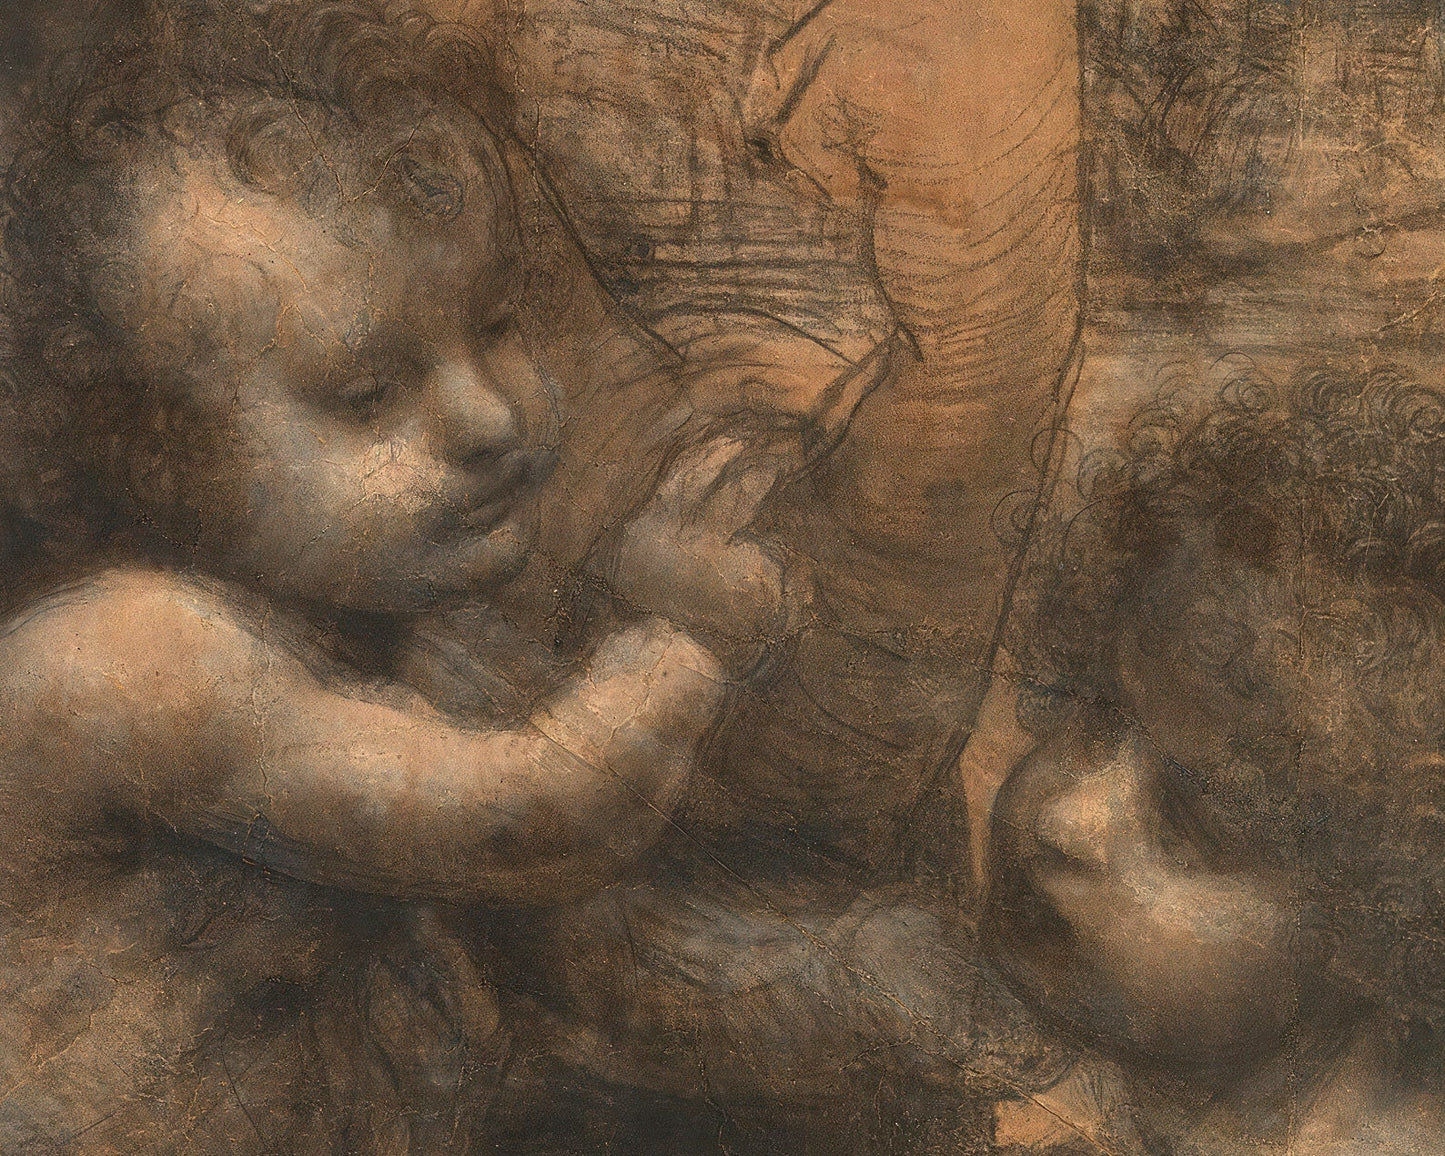 Leonardo da Vinci "The Virgin and Child with Saint Anne and Saint John the Baptist" (c.1500) - Mabon Gallery